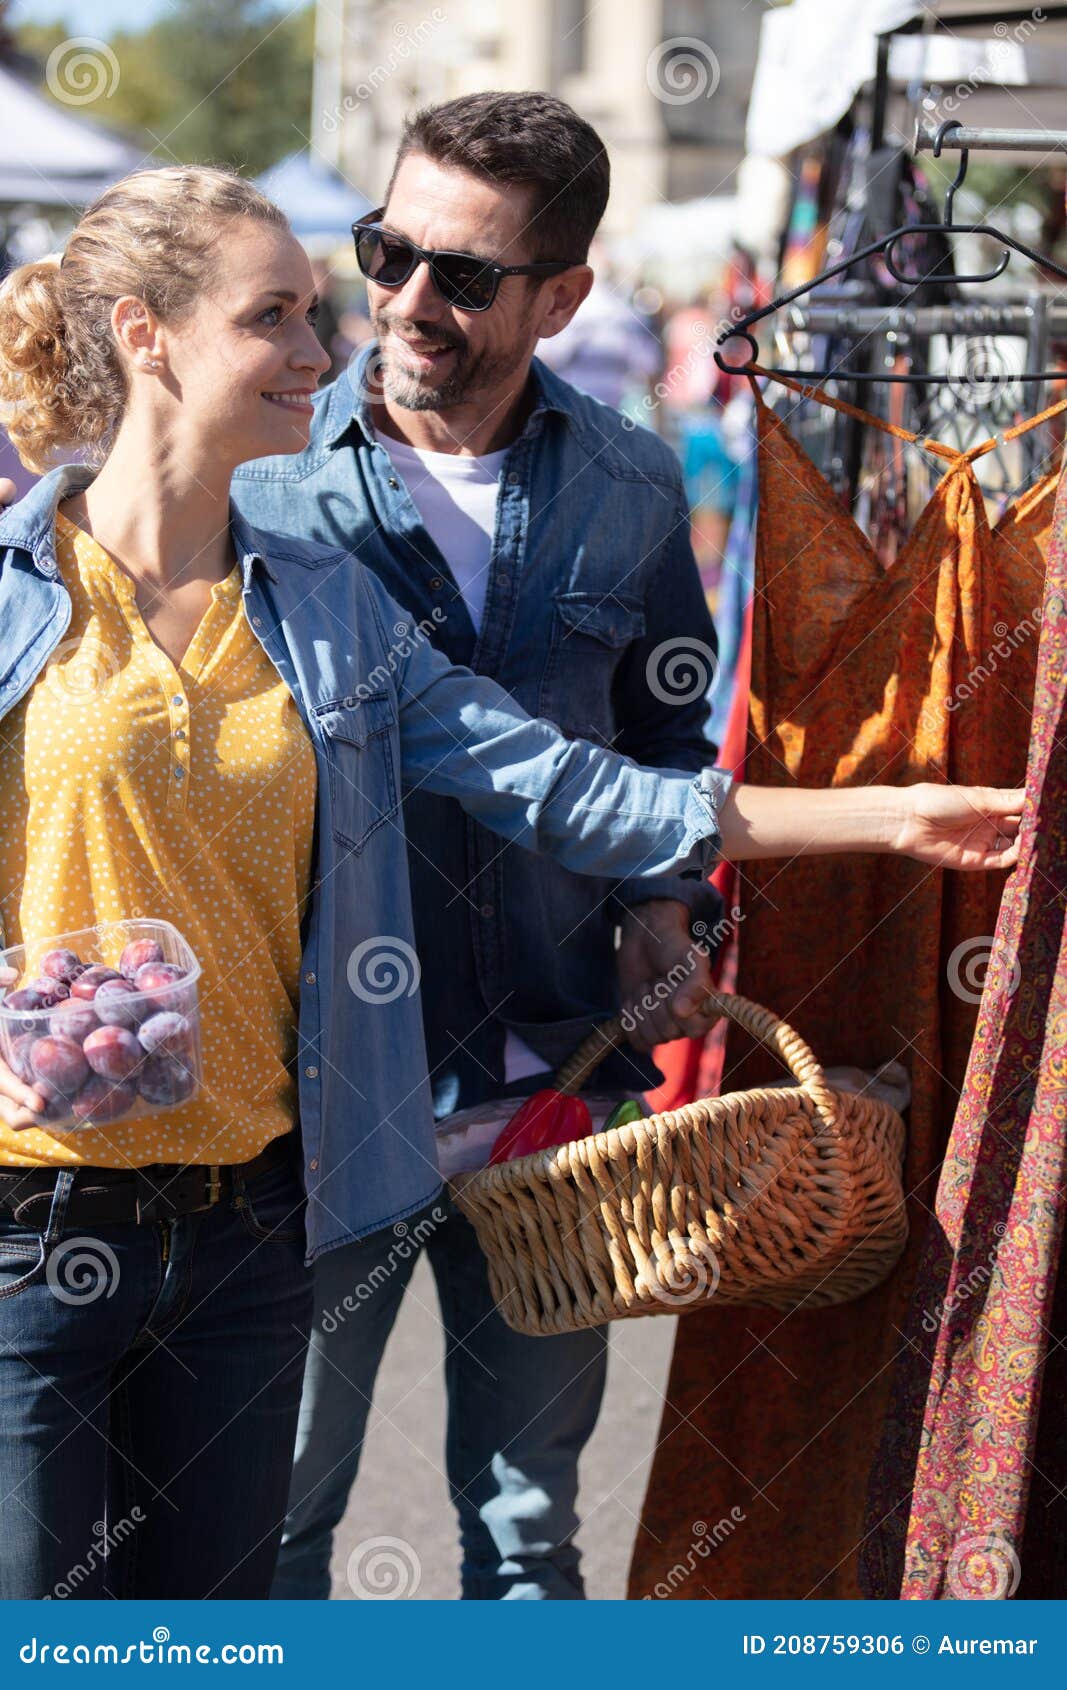 https://thumbs.dreamstime.com/z/pareja-visitando-el-mercado-de-ropa-al-aire-libre-un-208759306.jpg